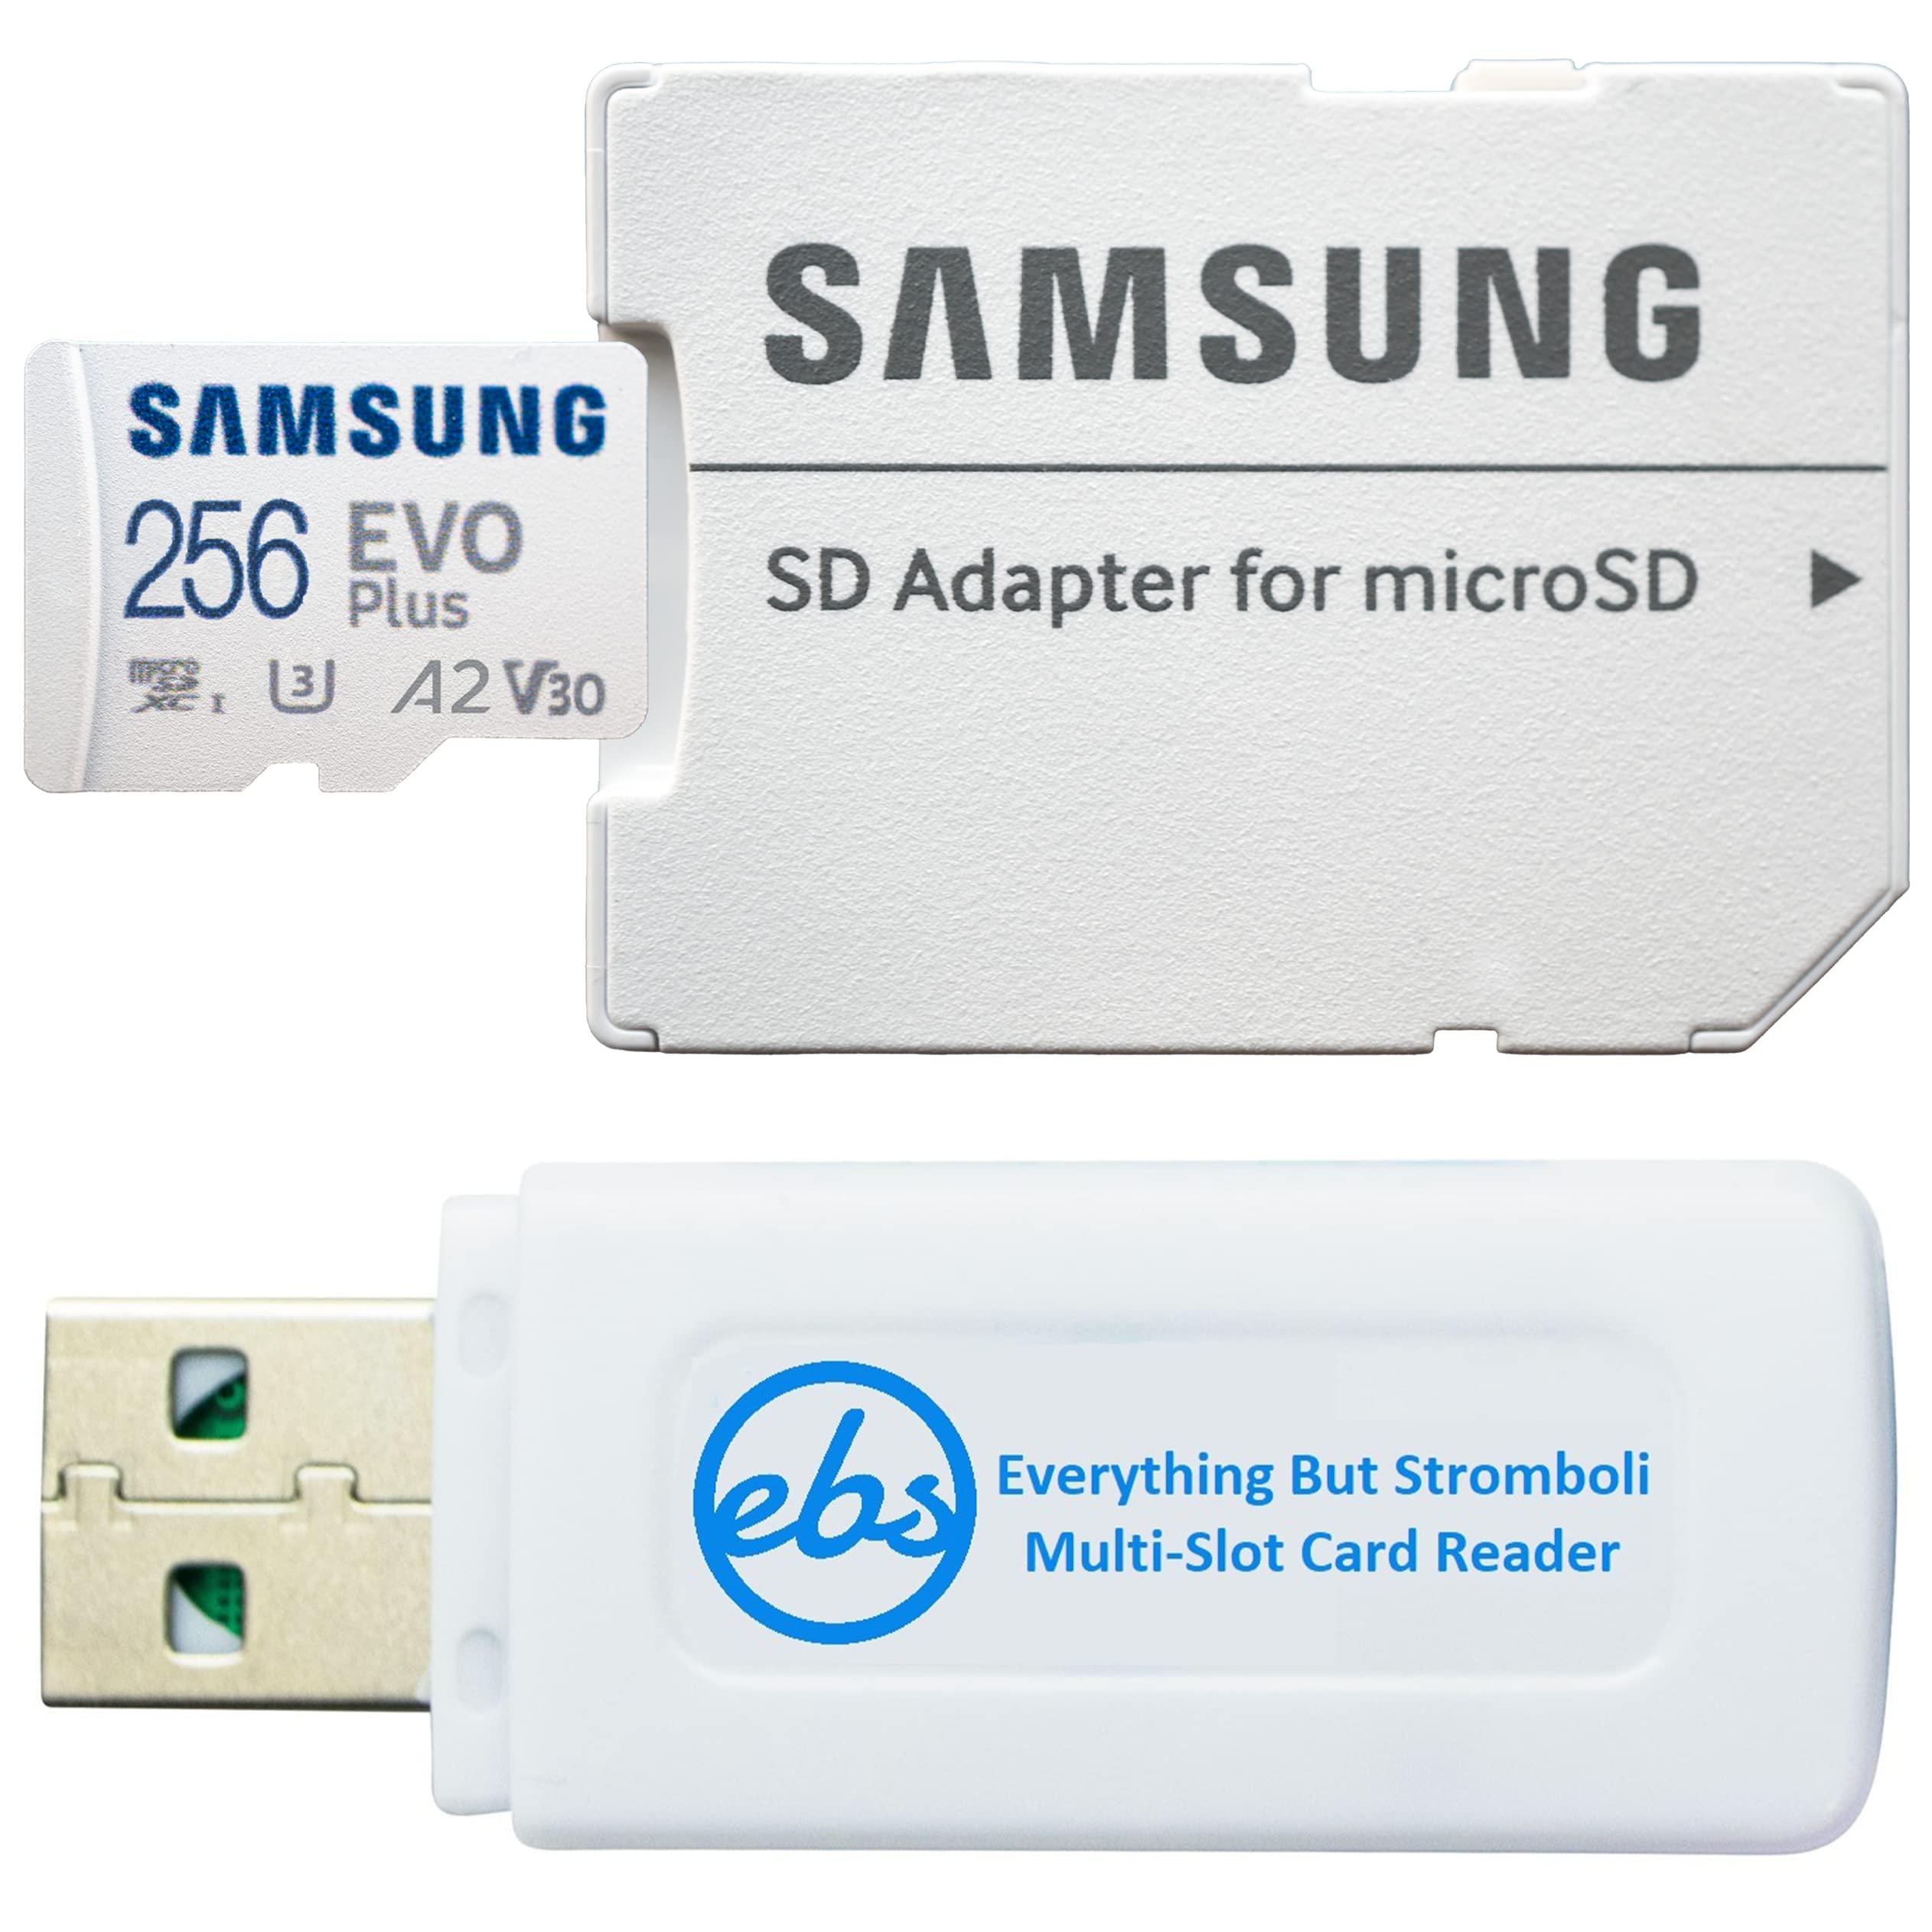 Samsung EVO Plus 256GB MicroSDXC UHS-I Card Works with Samsung Galaxy Note 20 Ultra Phone Note 10 Lite MB-MC256KA Bundle